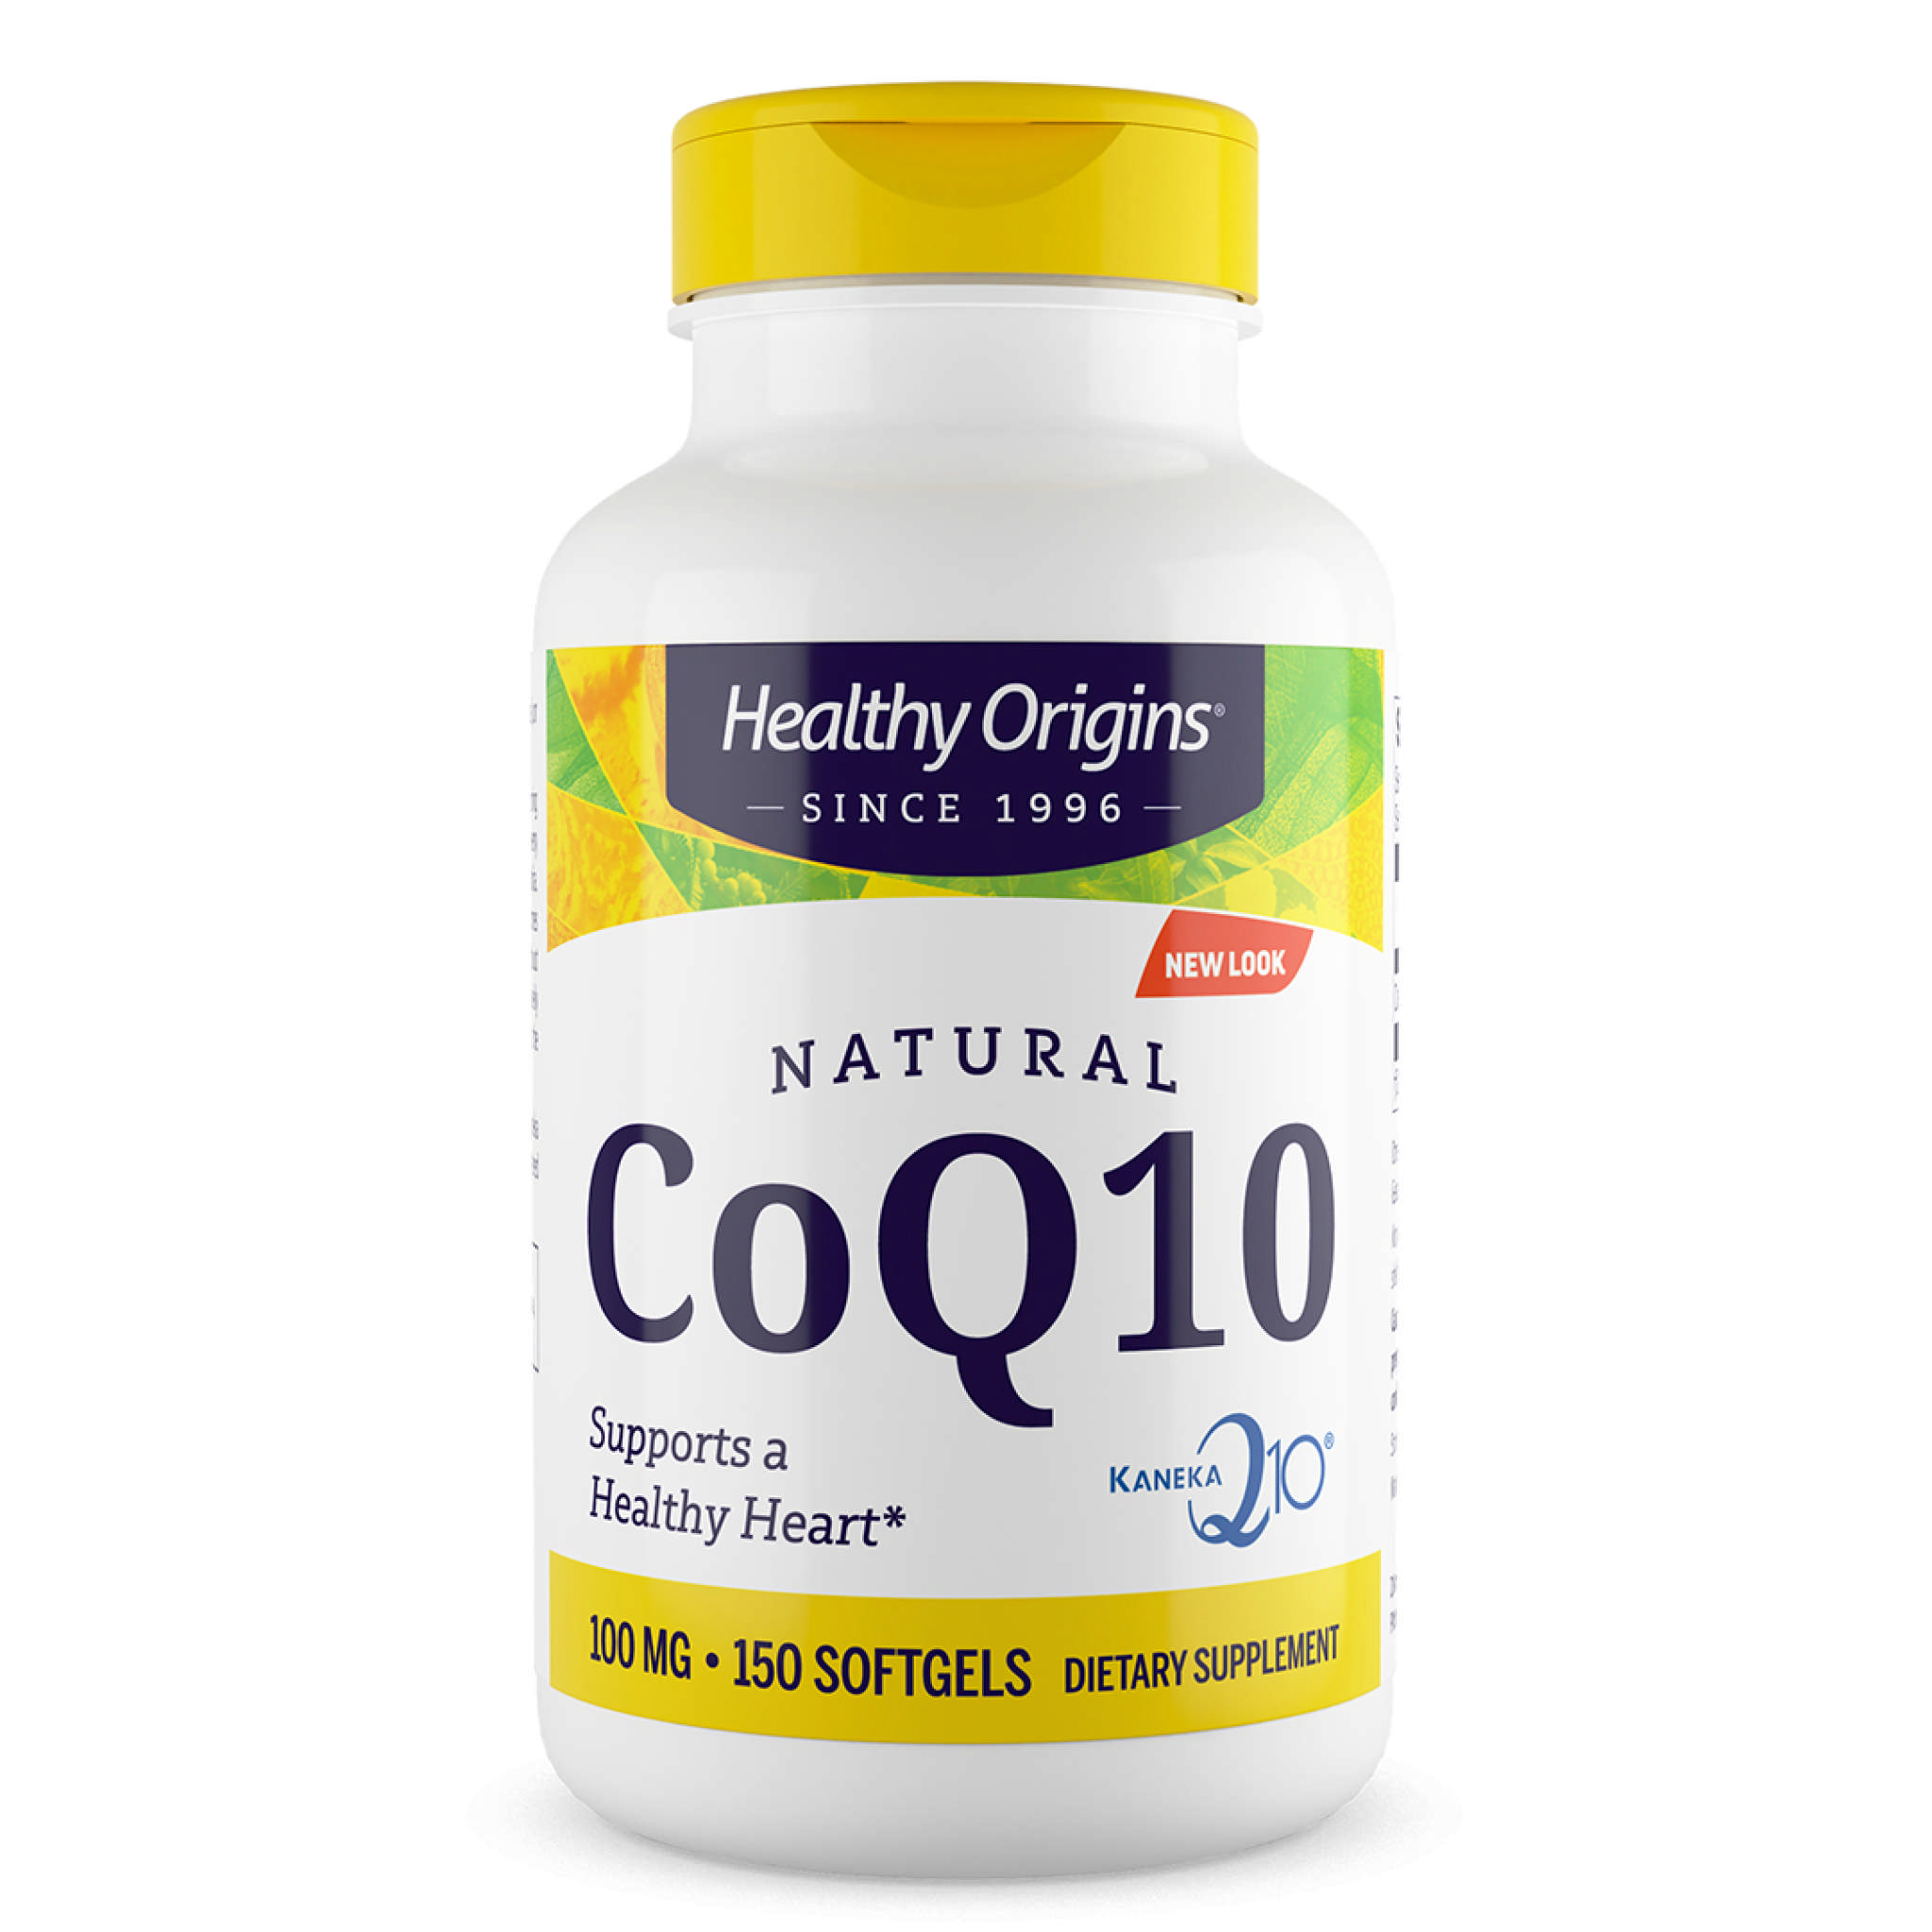 Healthy Origins - Coq10 100 mg softgel